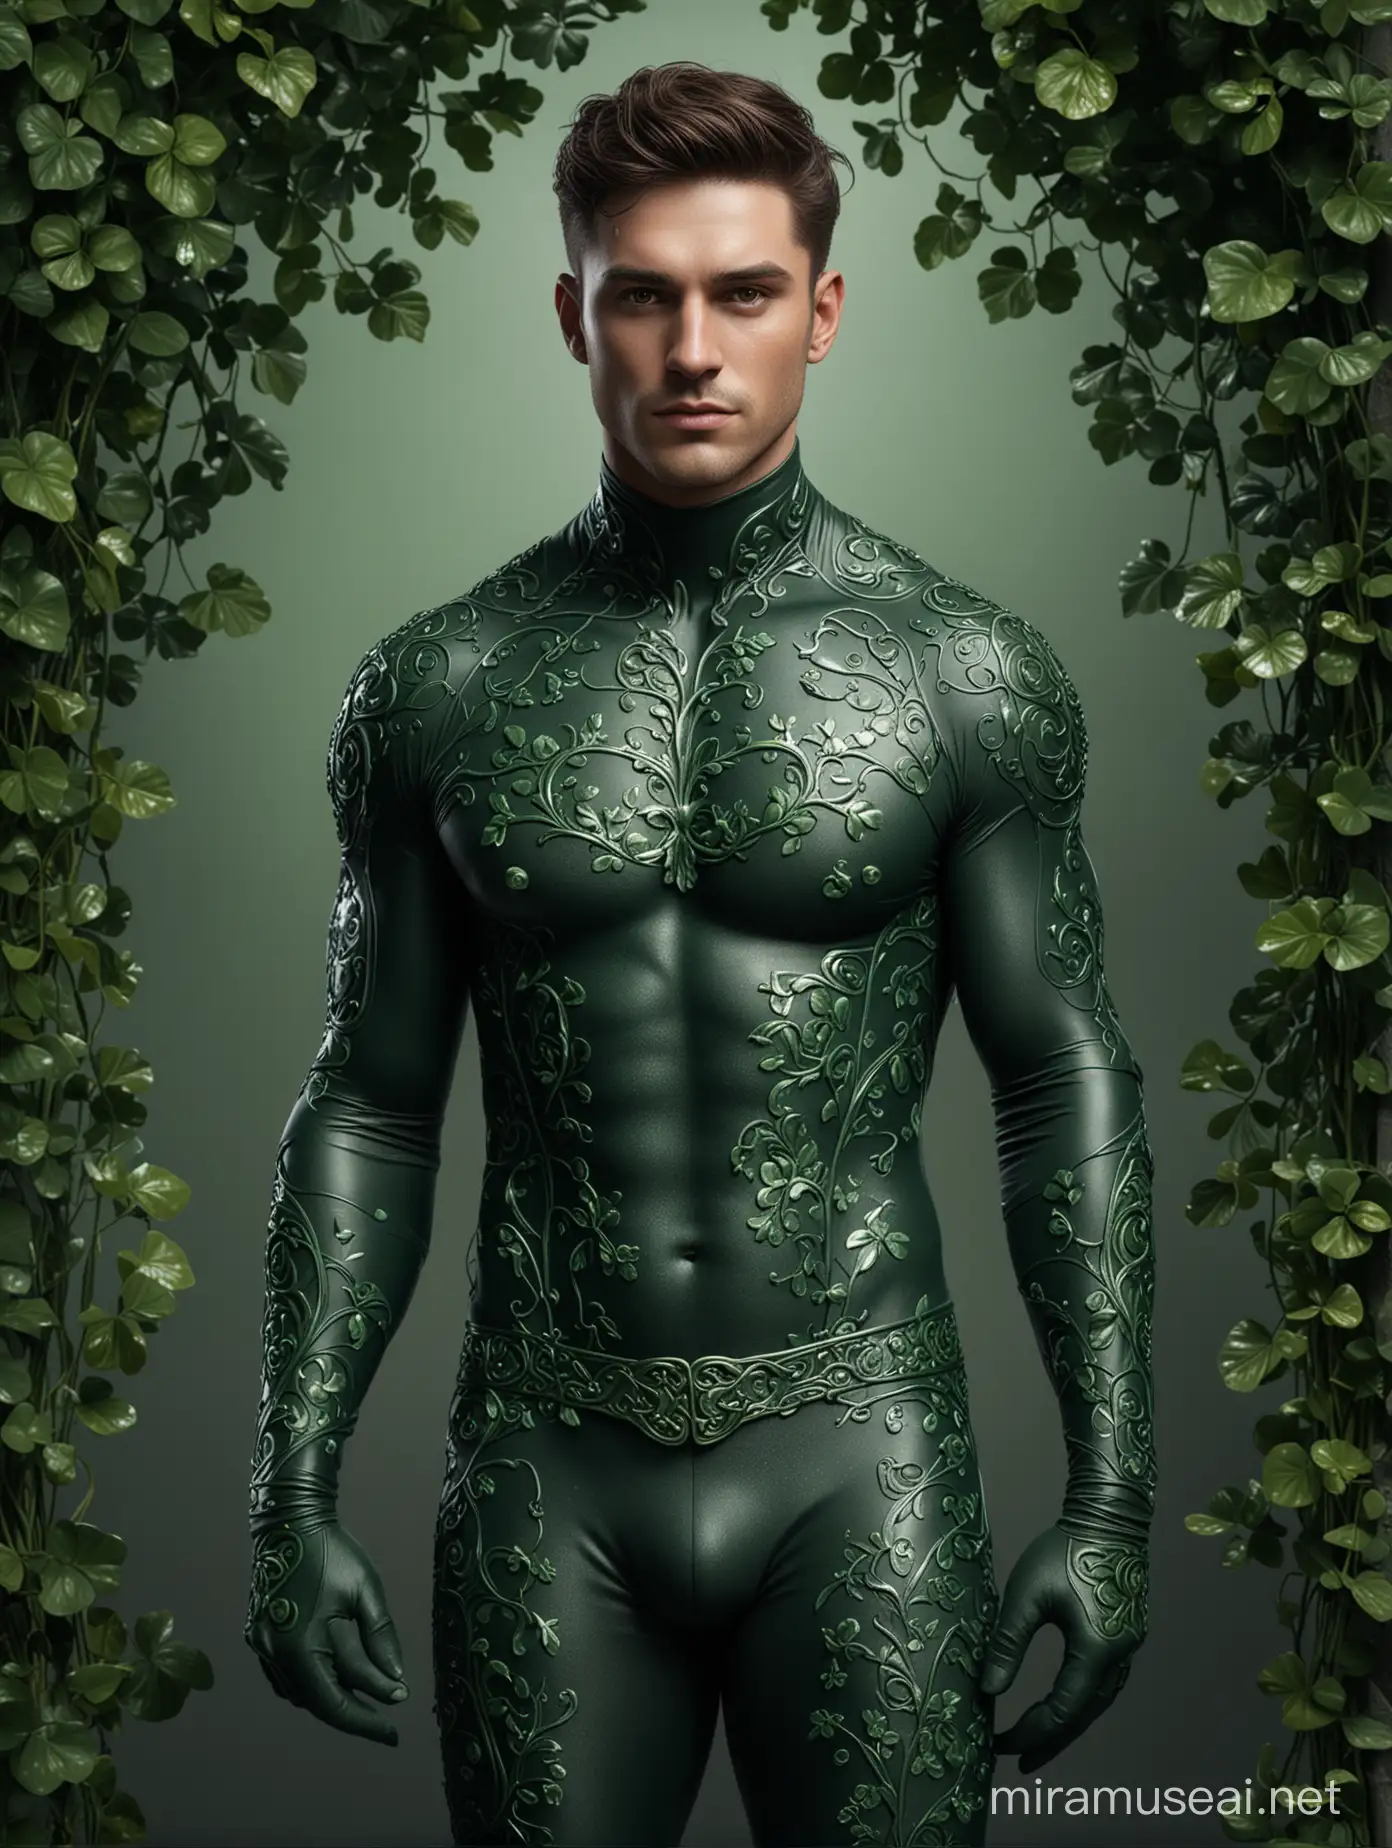 Handsome Poison Shamrock Character in Detailed Dark Green Latex Costume